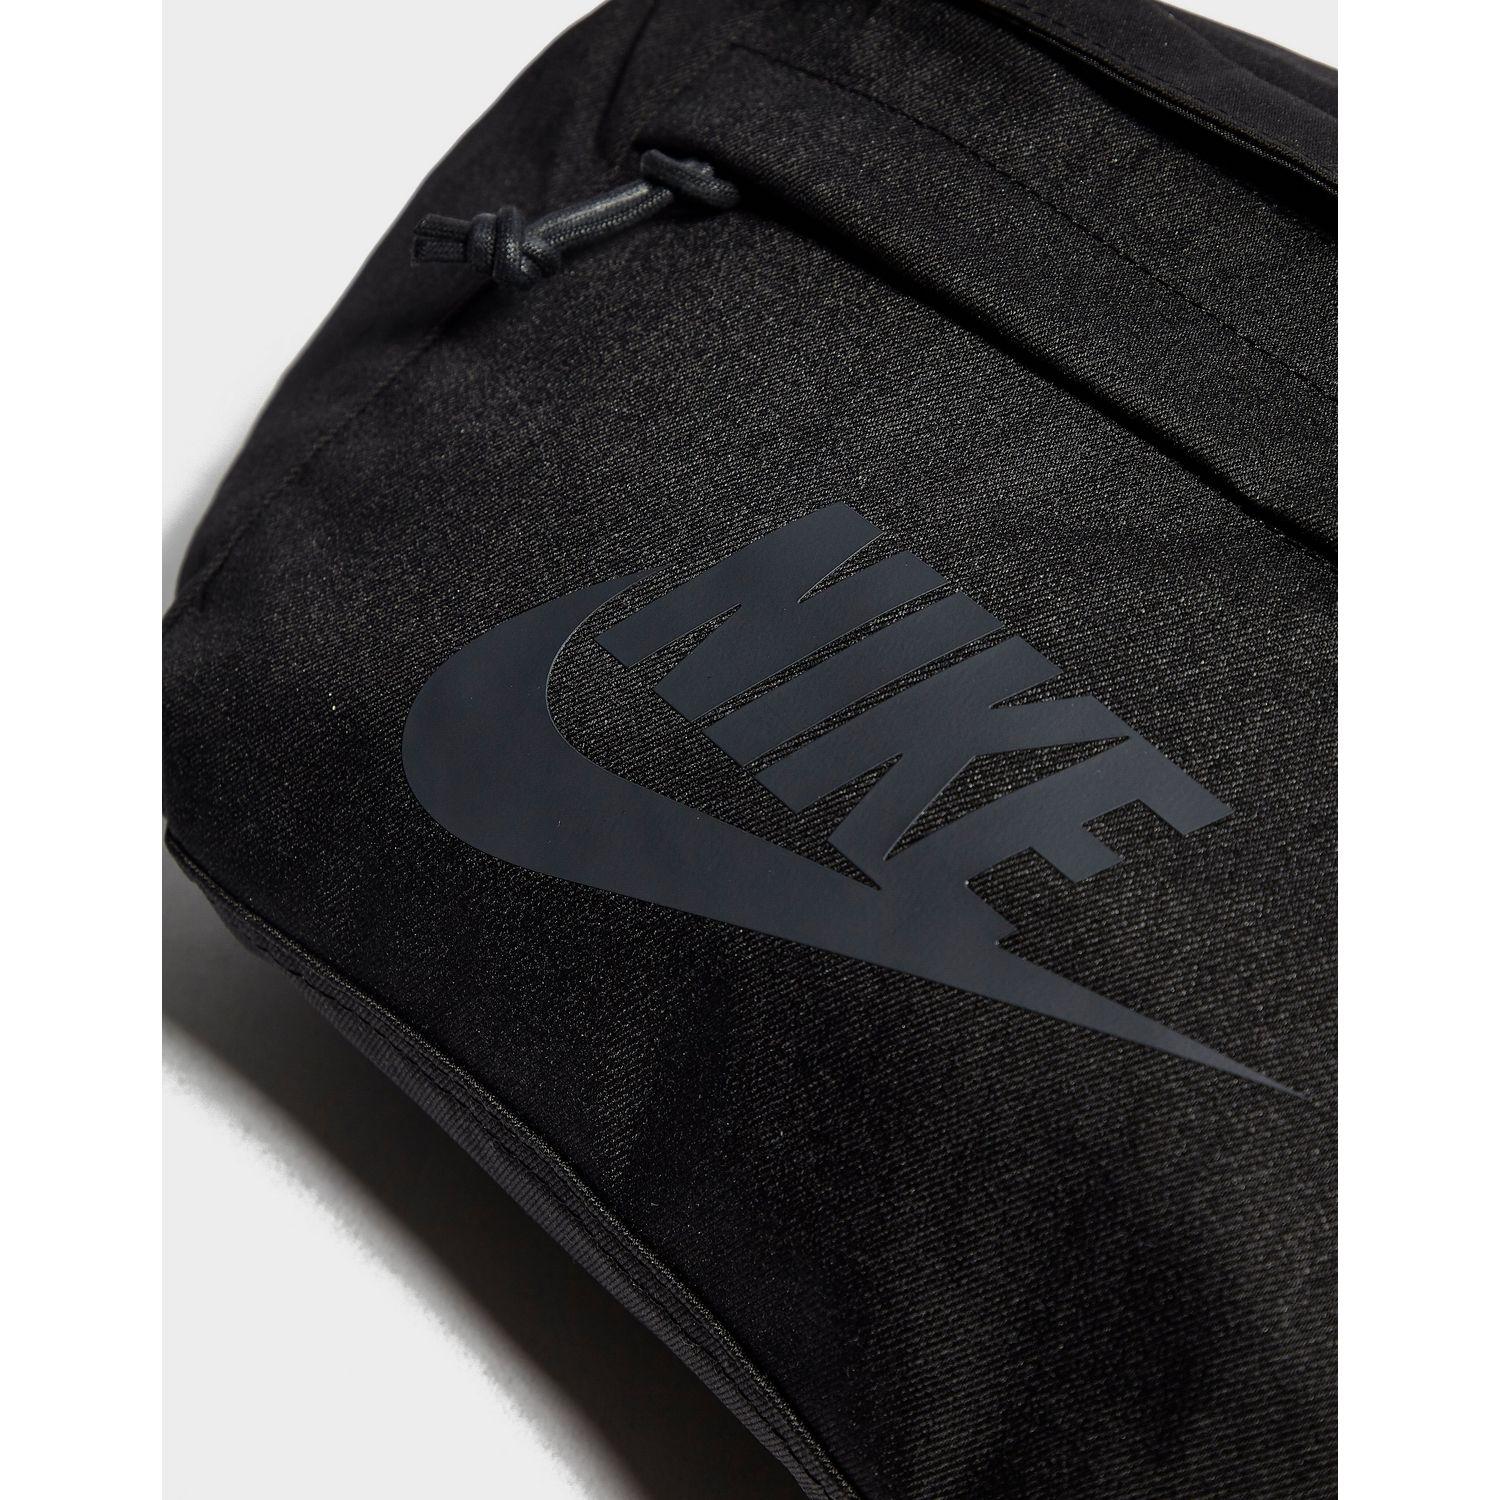 Nike Synthetic Tech Waist Bag in Black for Men - Lyst